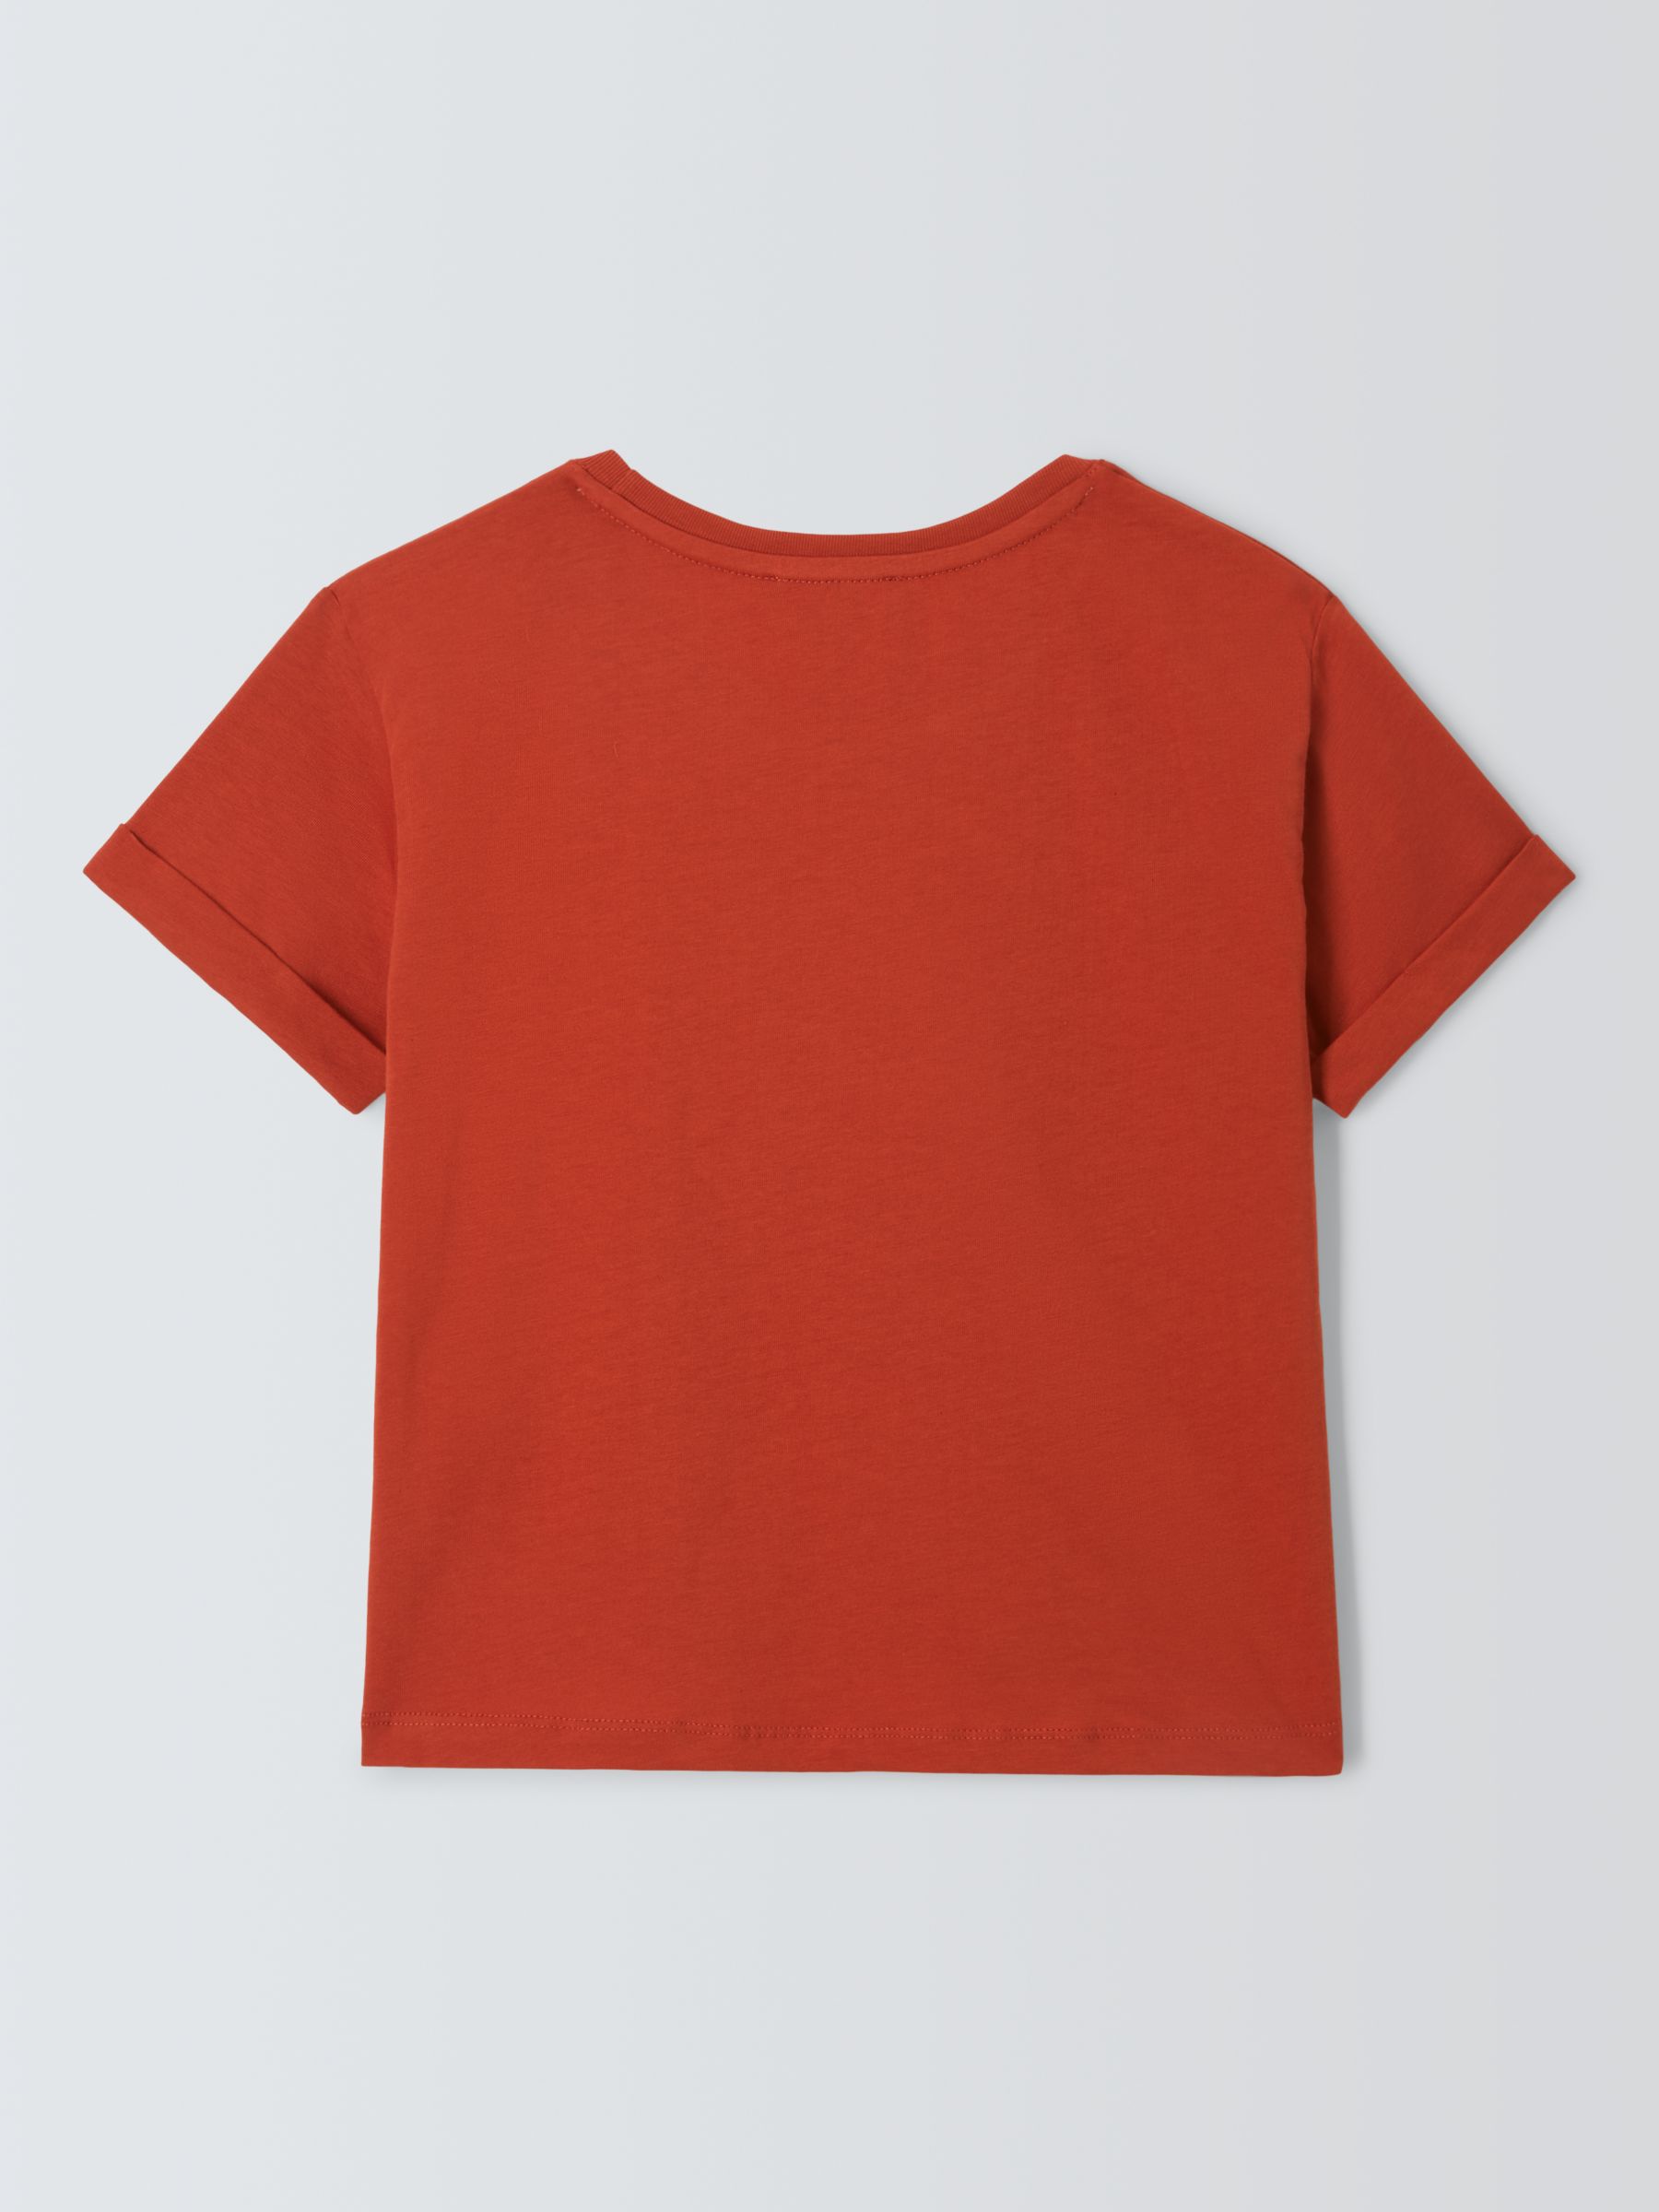 Armor Lux Kids' Fish Print Short Sleeve T-Shirt, Ketchup, 10 years